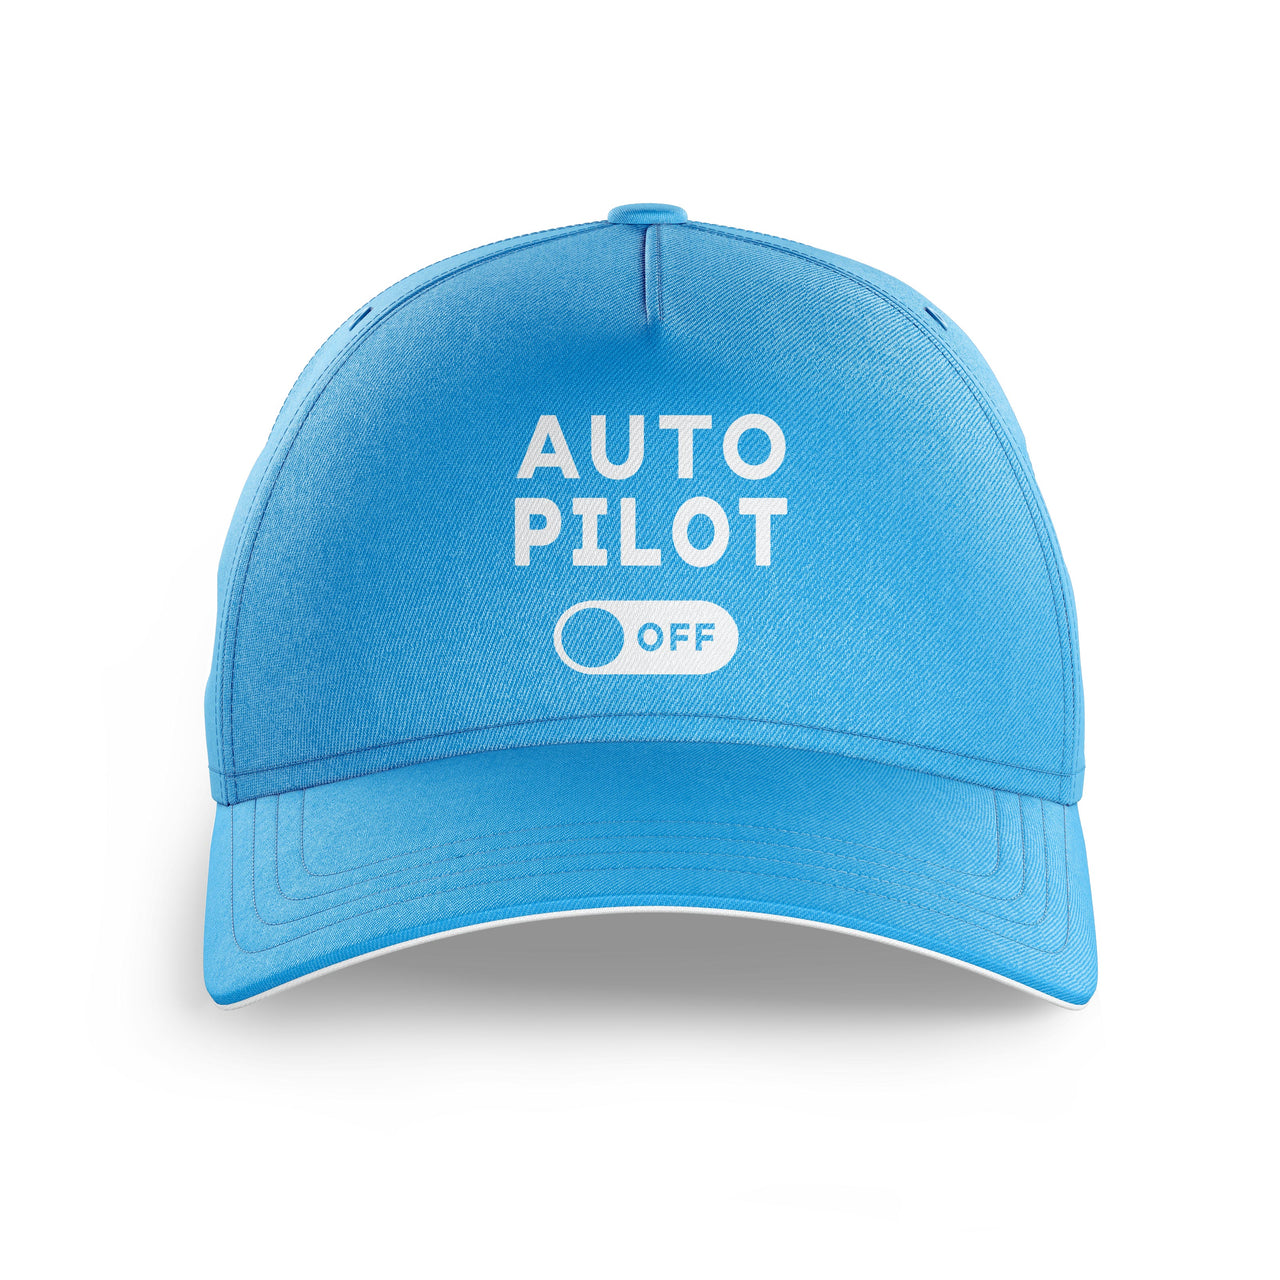 Auto Pilot Off Printed Hats